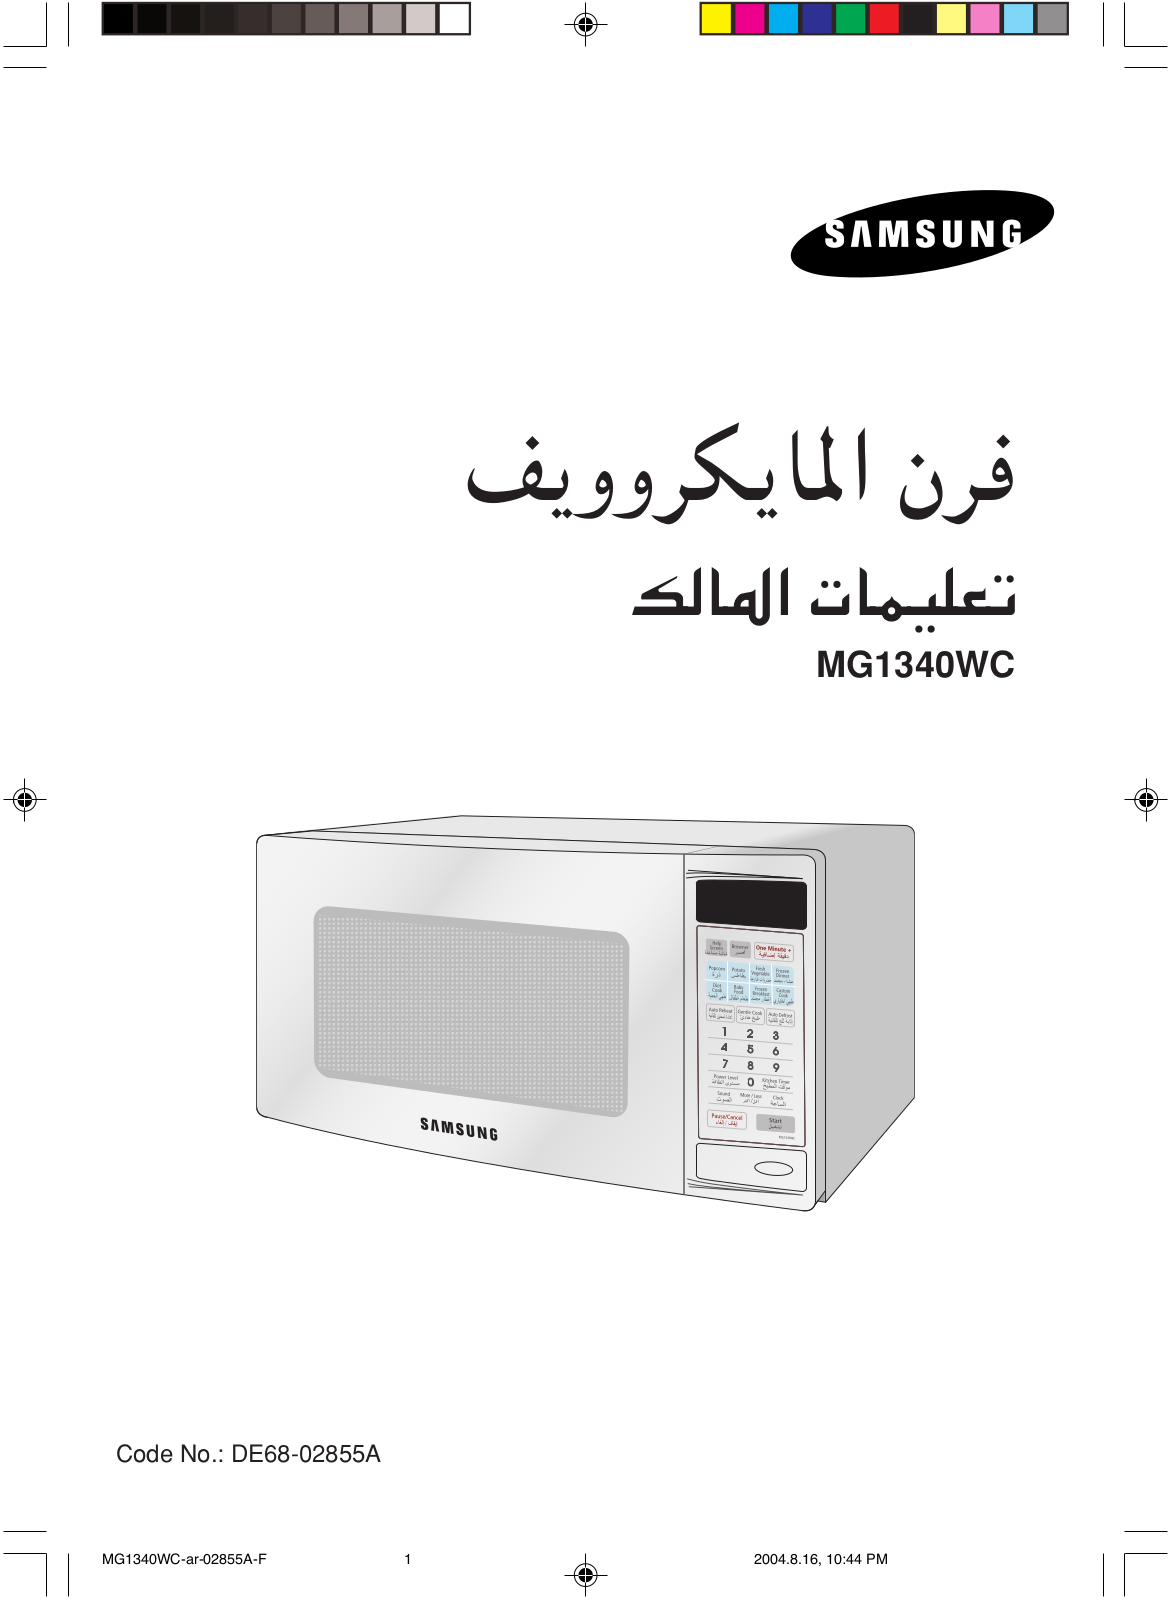 Samsung MG1340WC User Manual